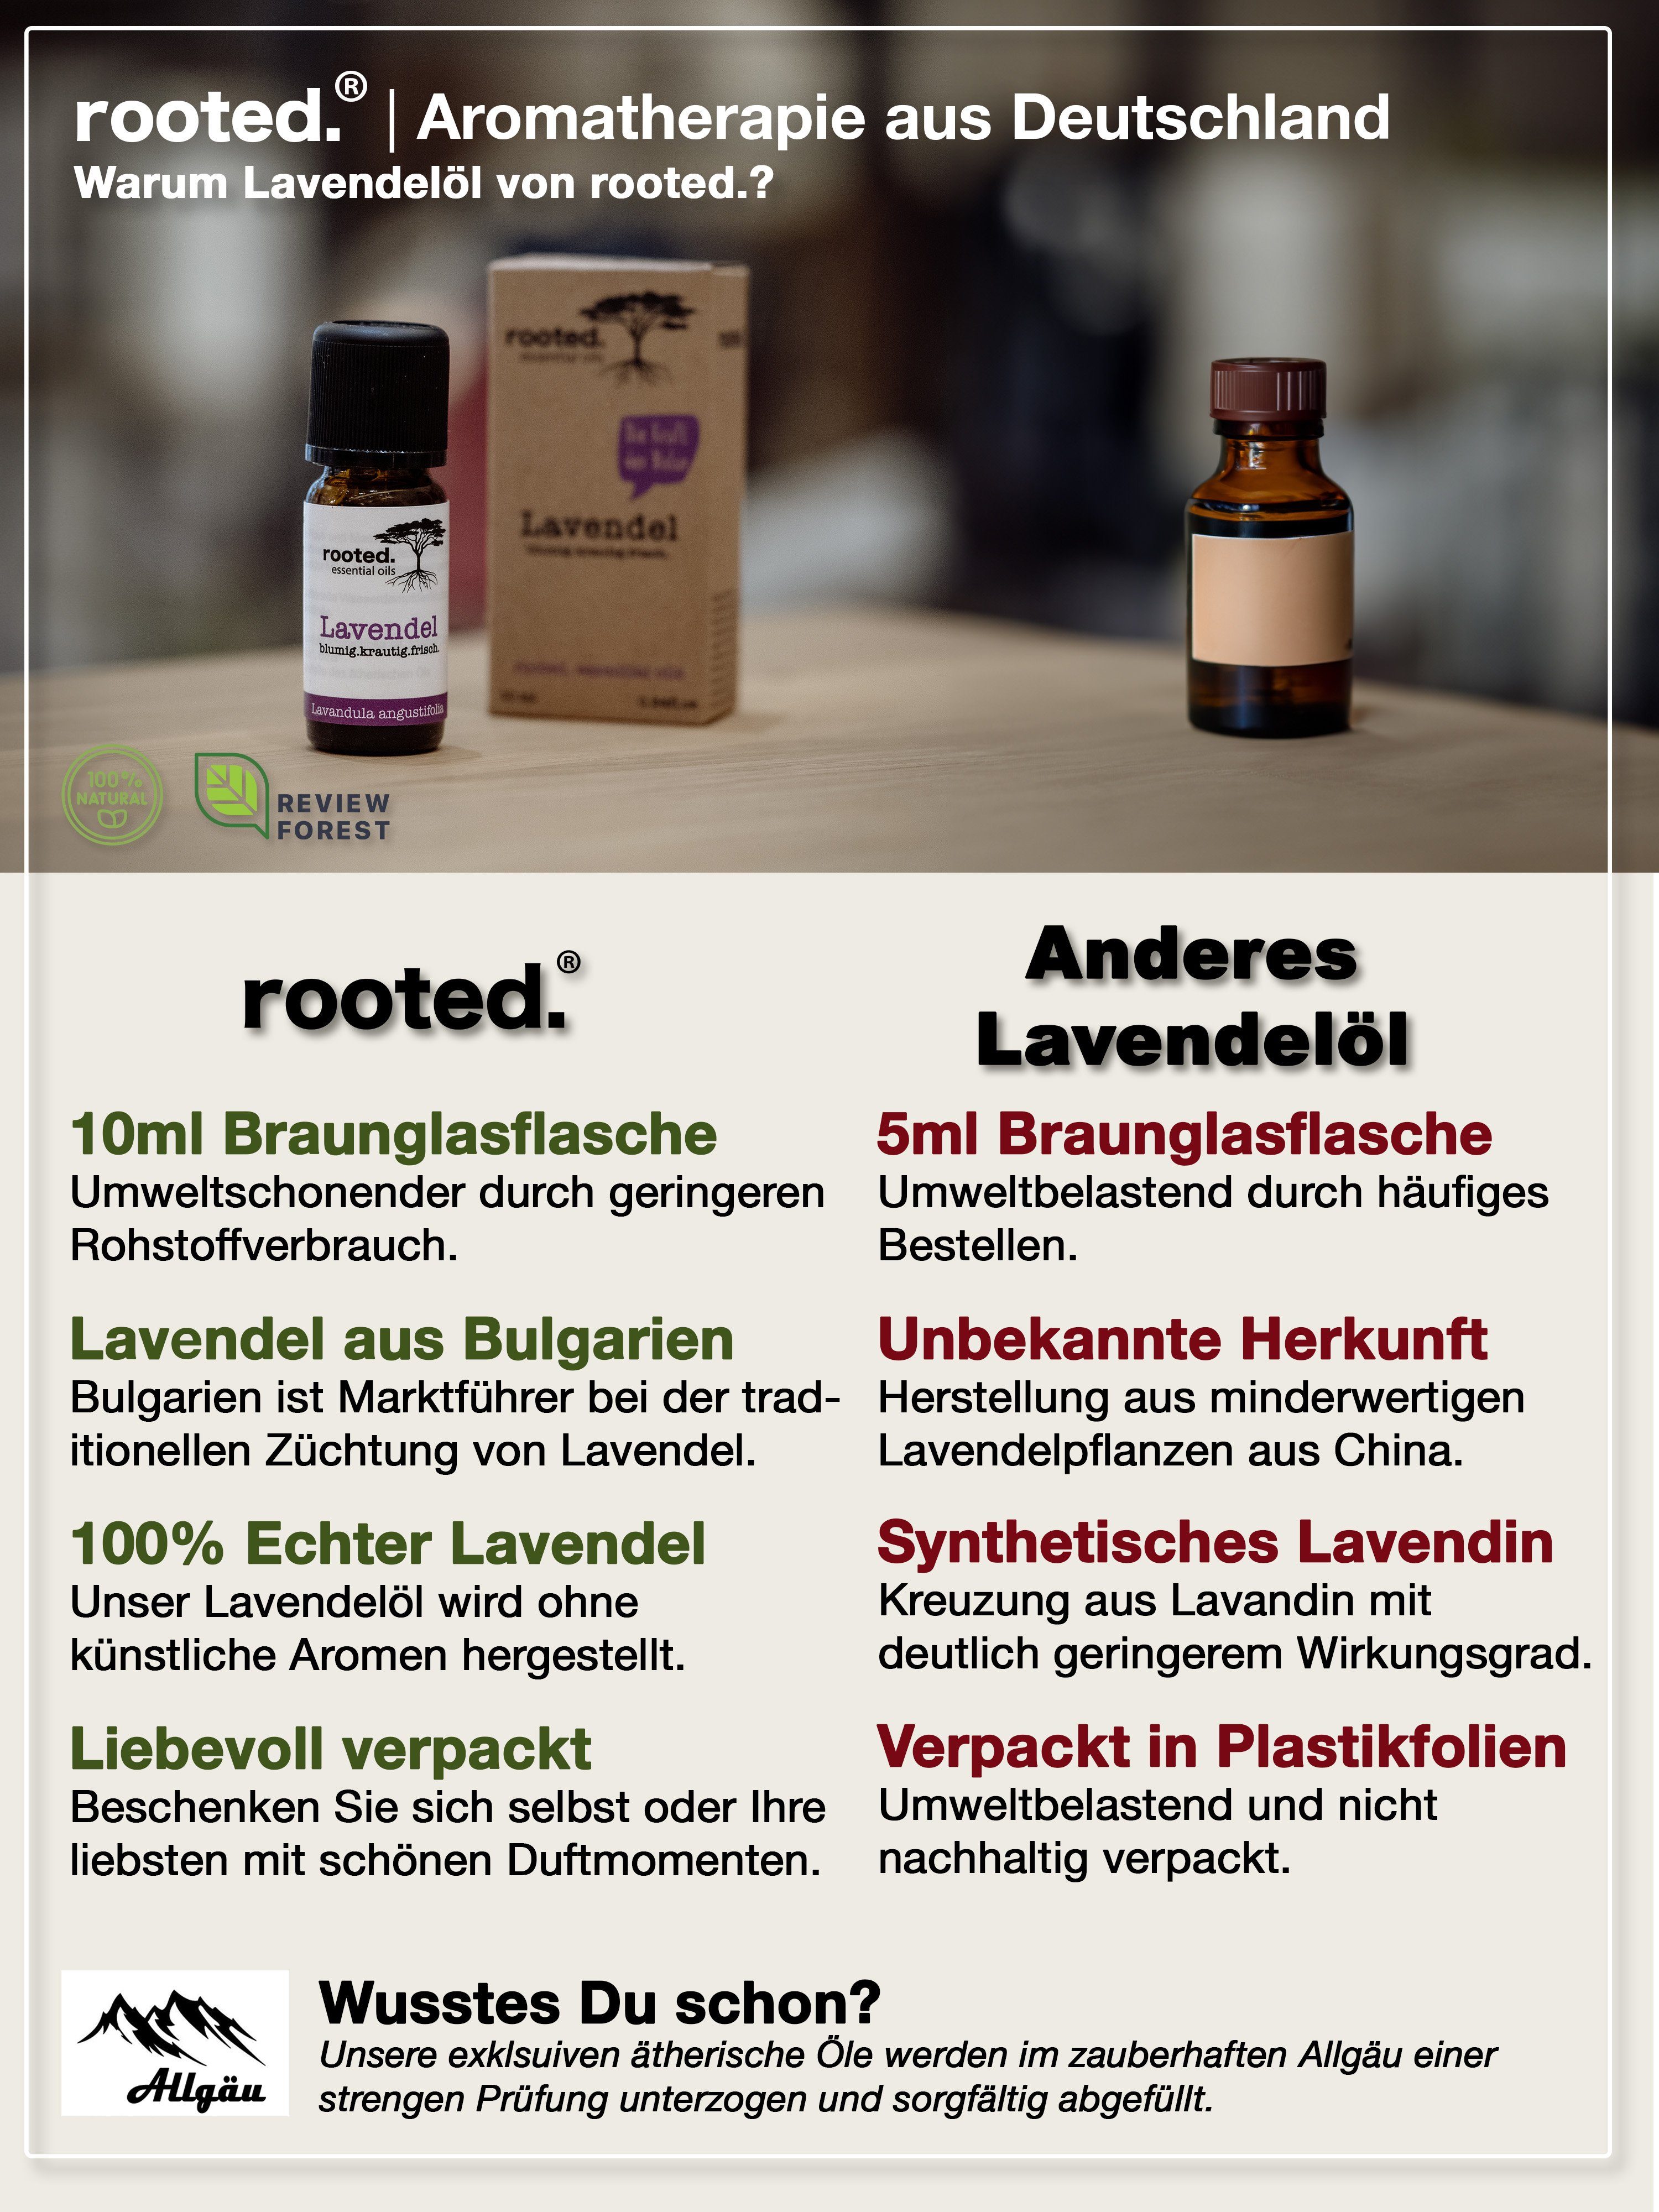 Lavandula Körperöl rooted. Lavendelöl, 10ml angustifolia rooted.®, ätherisches